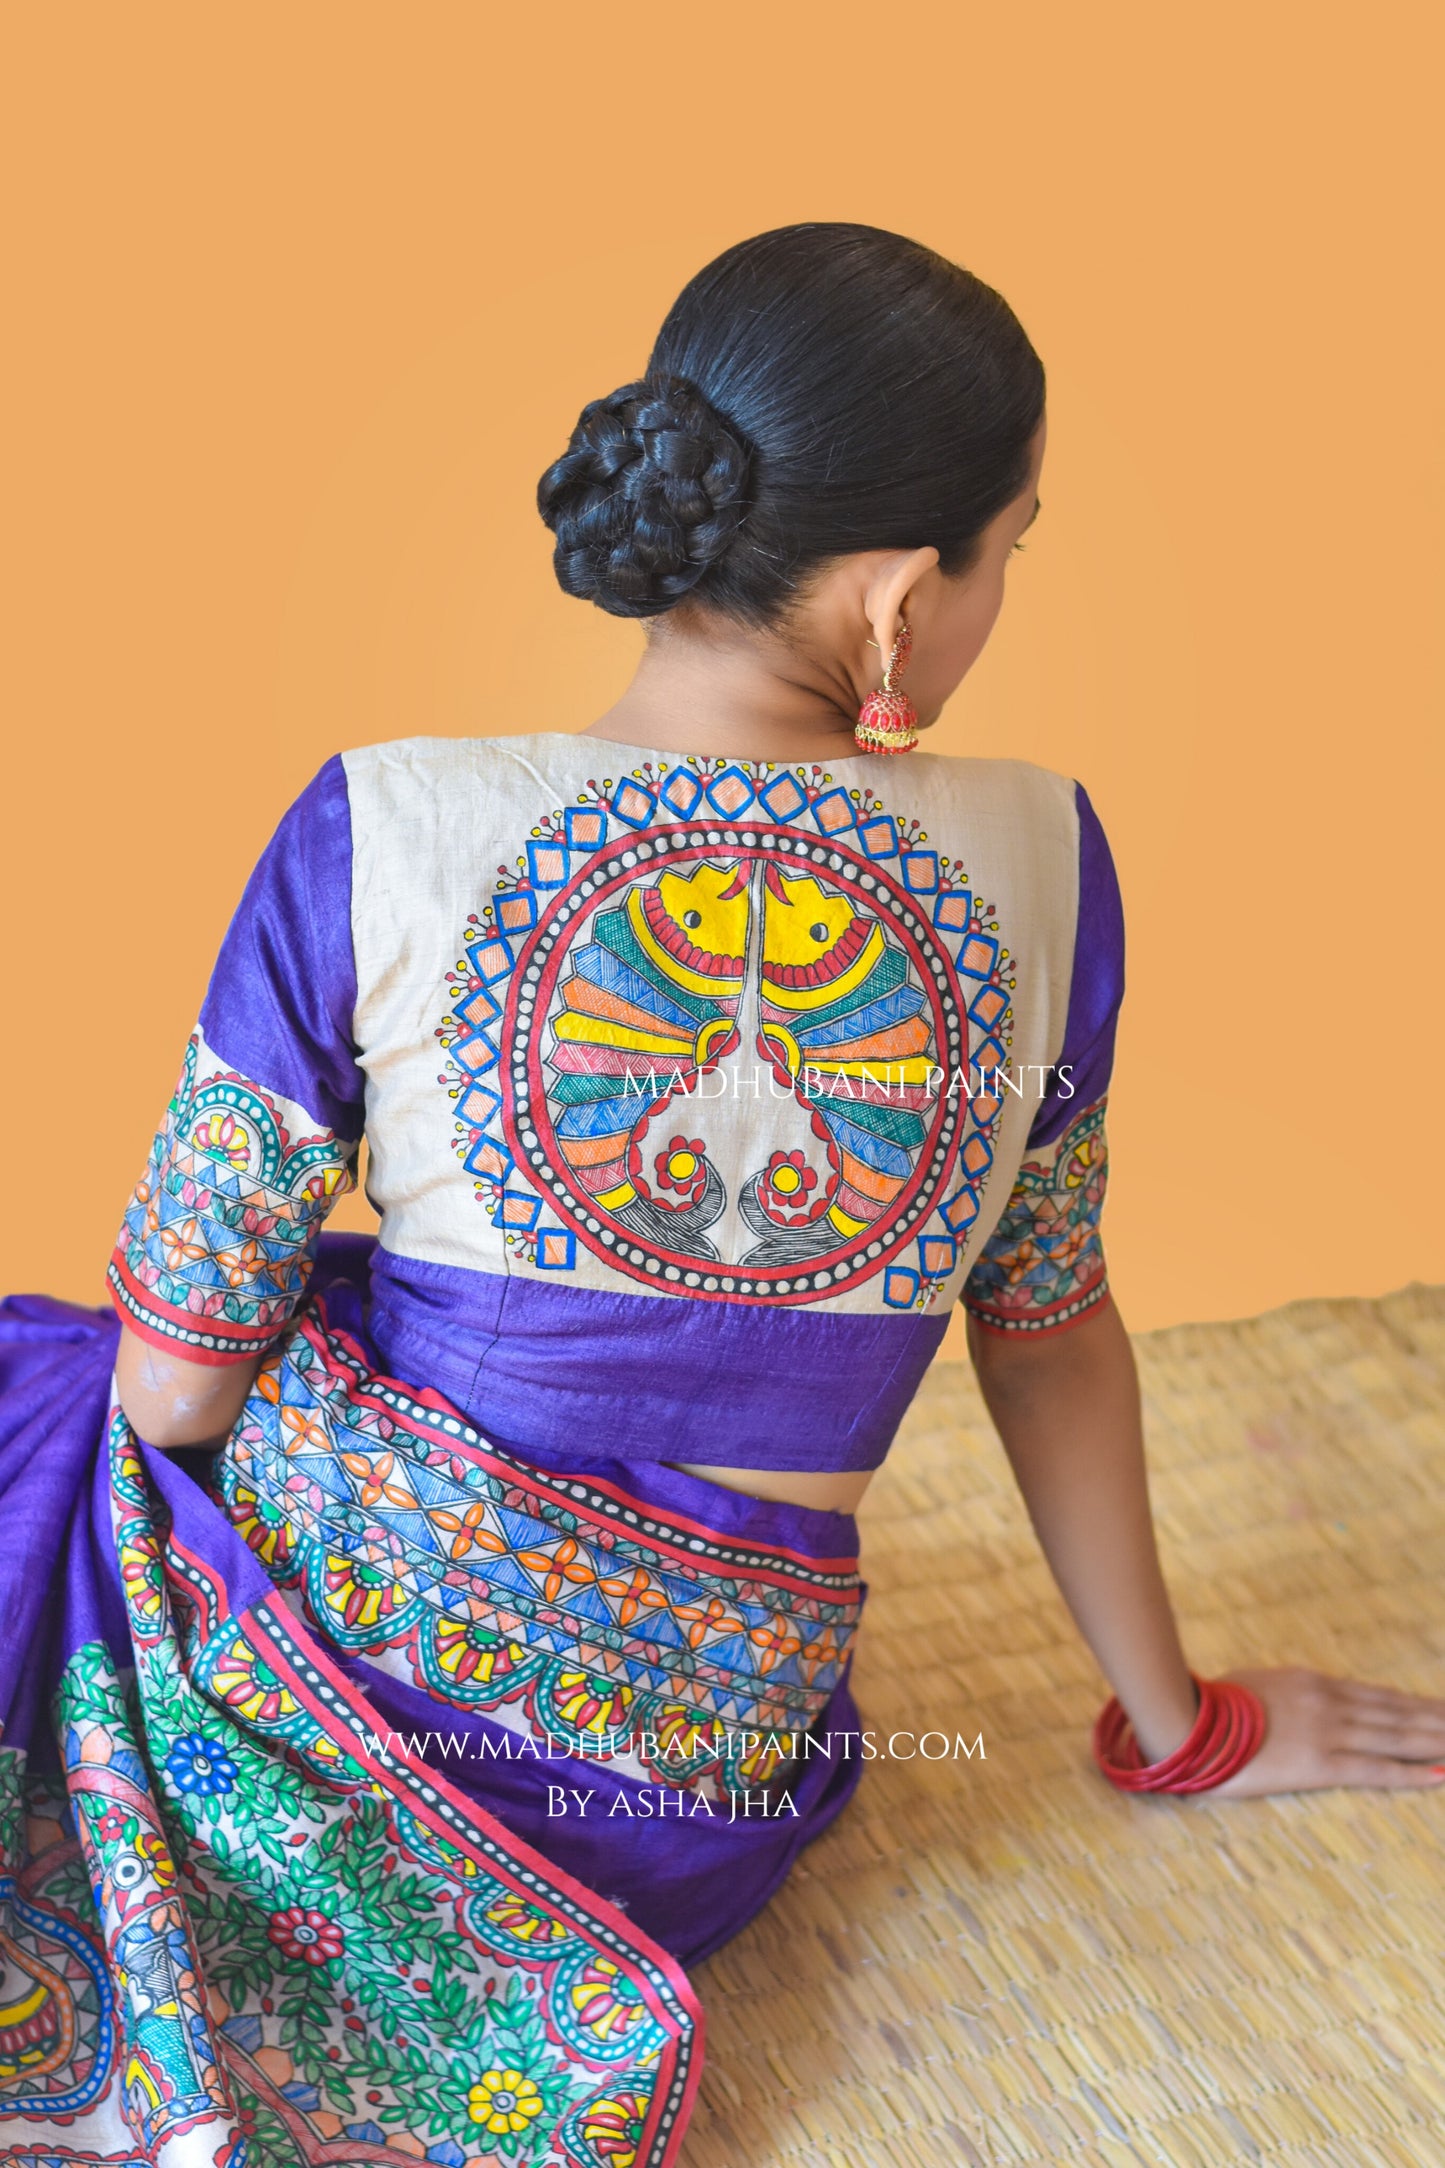 'MANOHARA' Tussar Silk Hand-Painted Madhubani Blouse